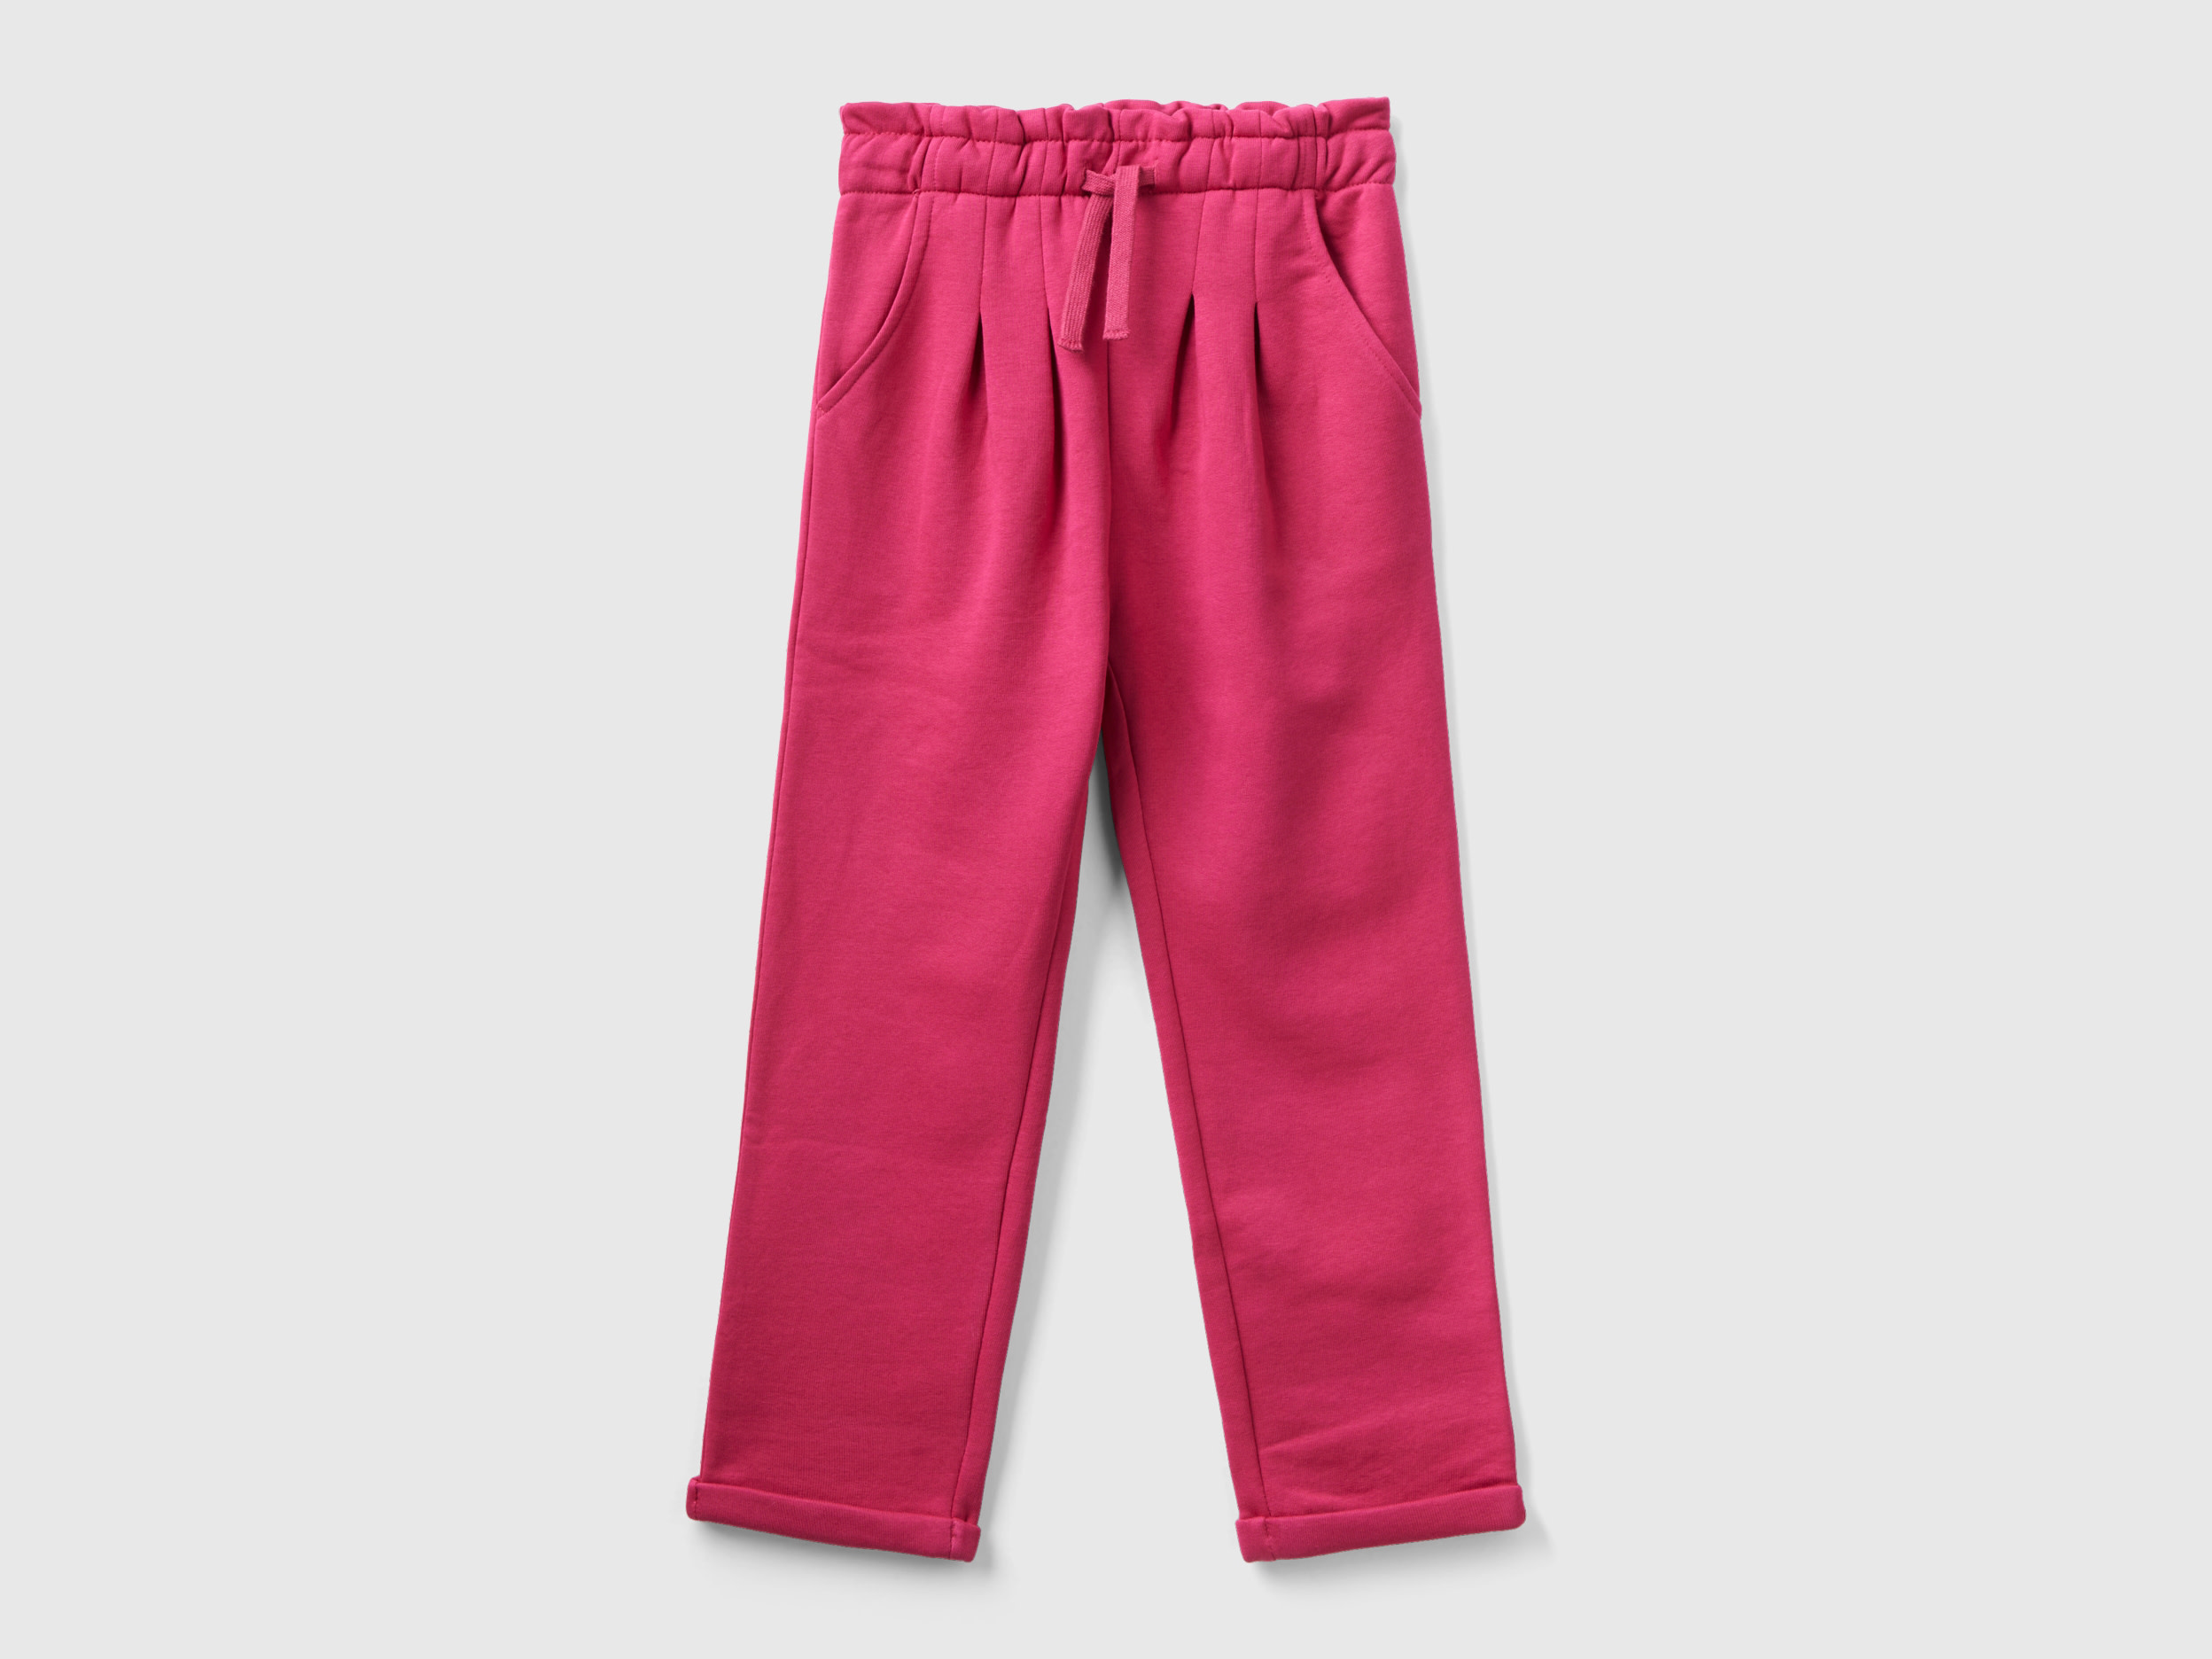 Benetton, Paperbag Trousers In Warm Sweat Fabric, size 3XL, Cyclamen, Kids